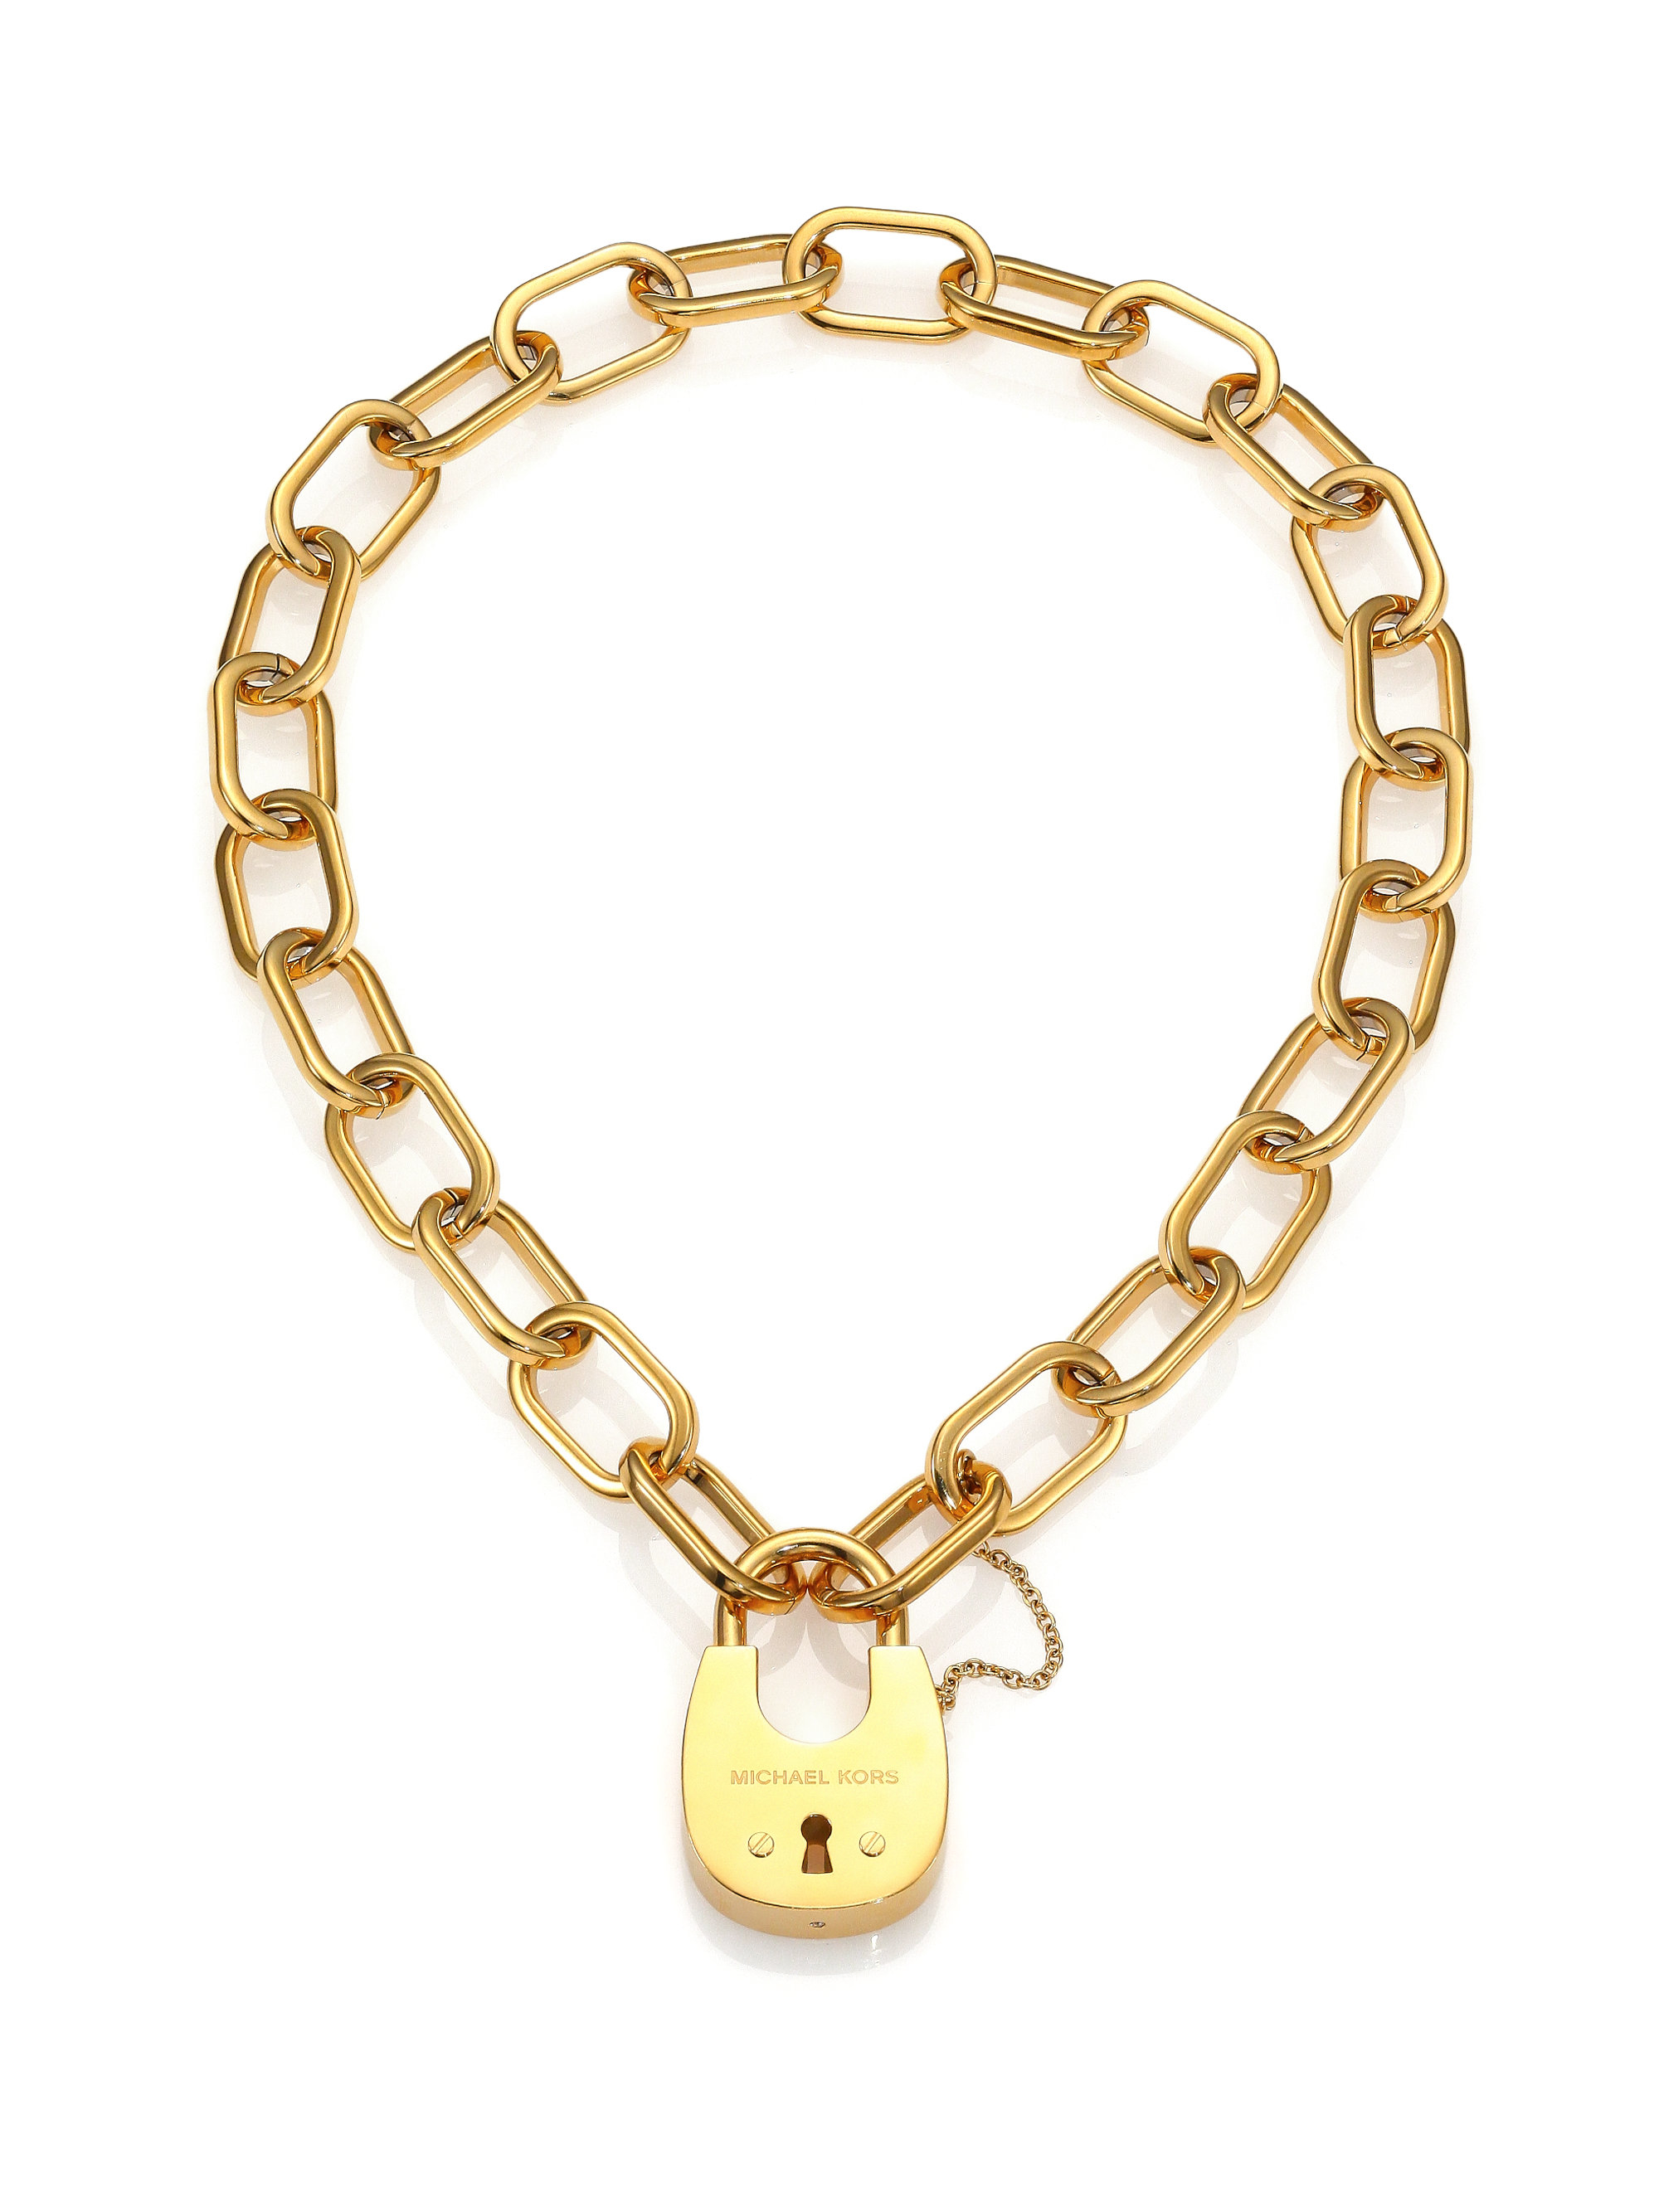 michael kors gold padlock necklace off 52% - www.intolegalworld.com